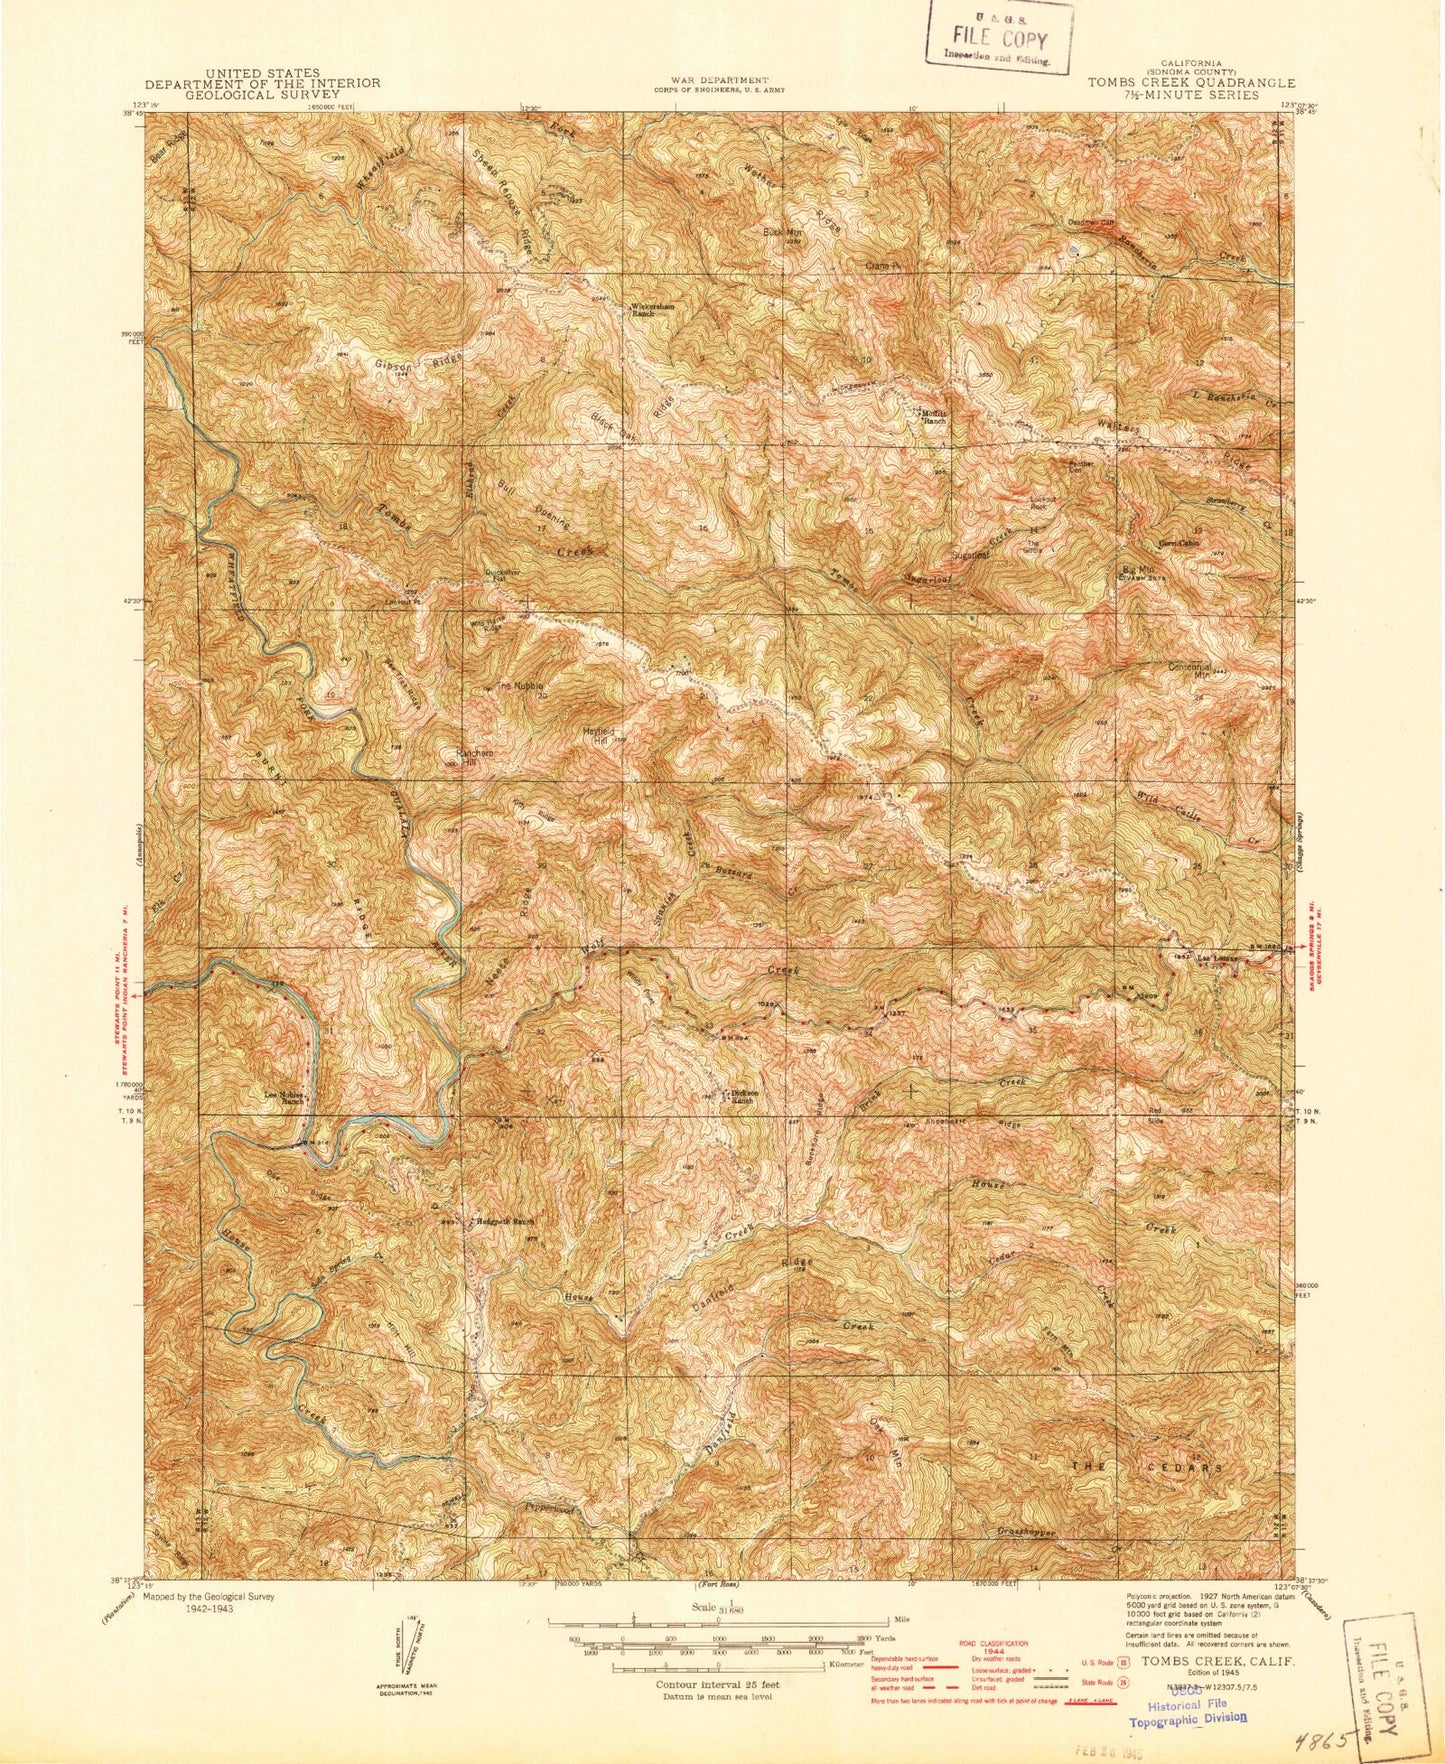 Classic USGS Tombs Creek California 7.5'x7.5' Topo Map Image